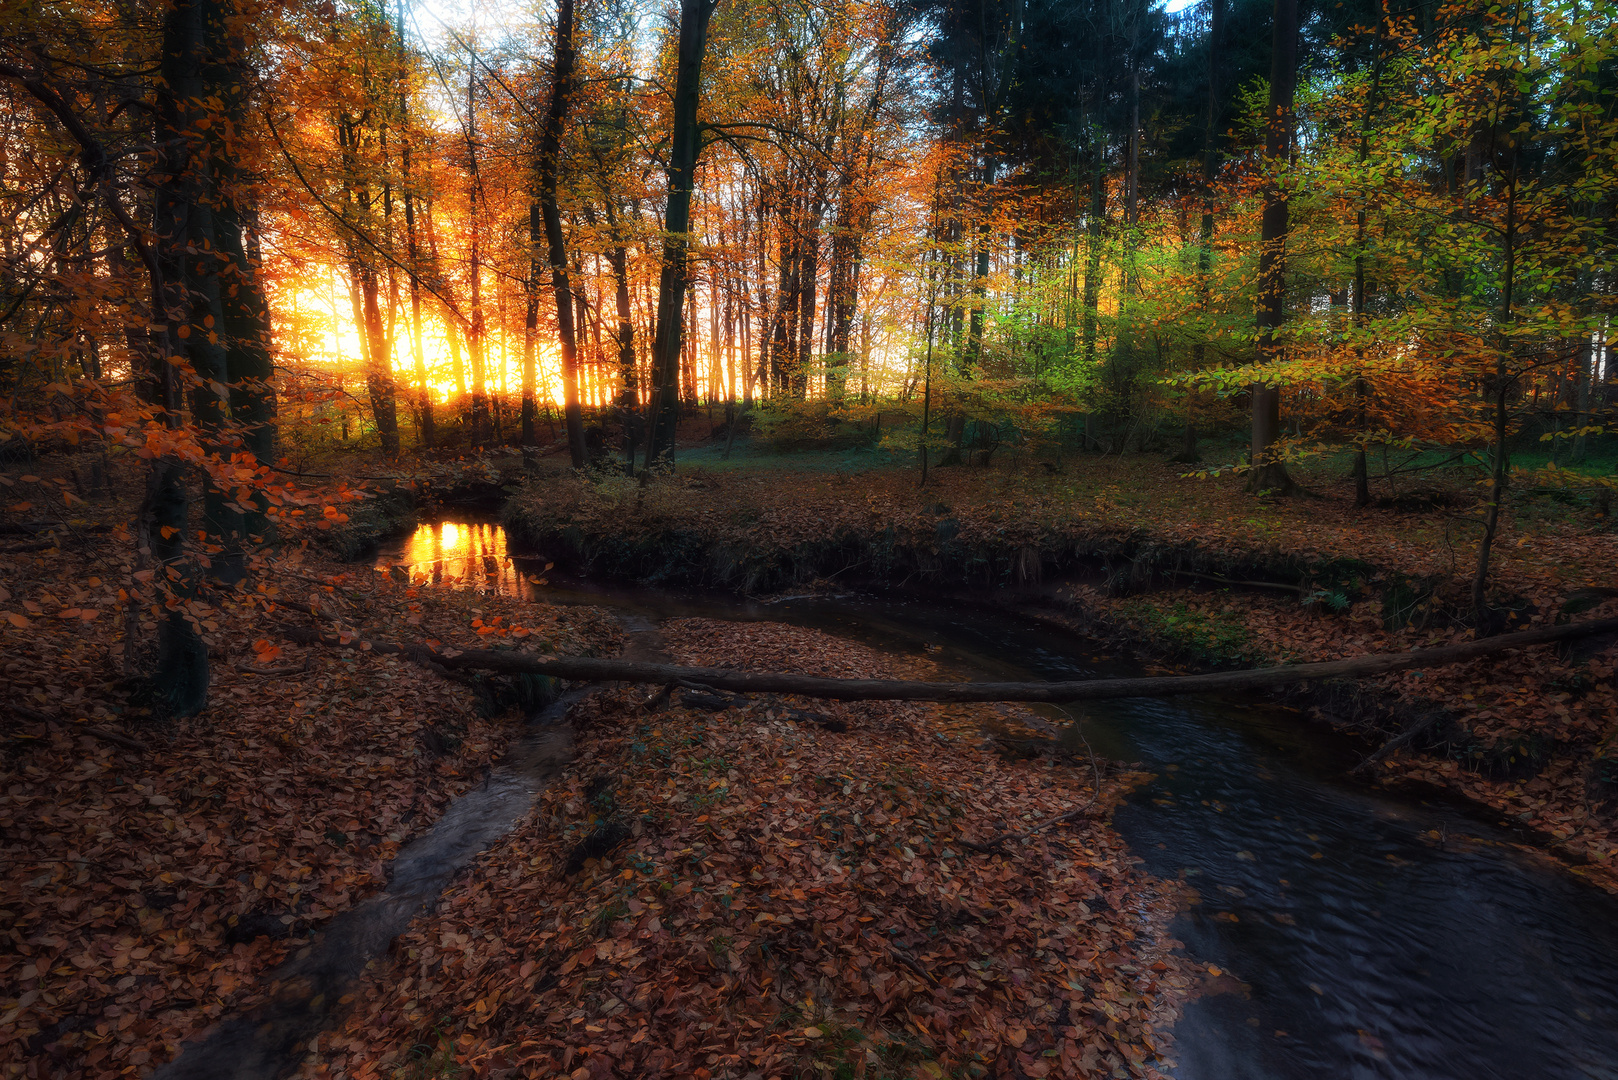 - Sonnenuntergang im Herbstwald -